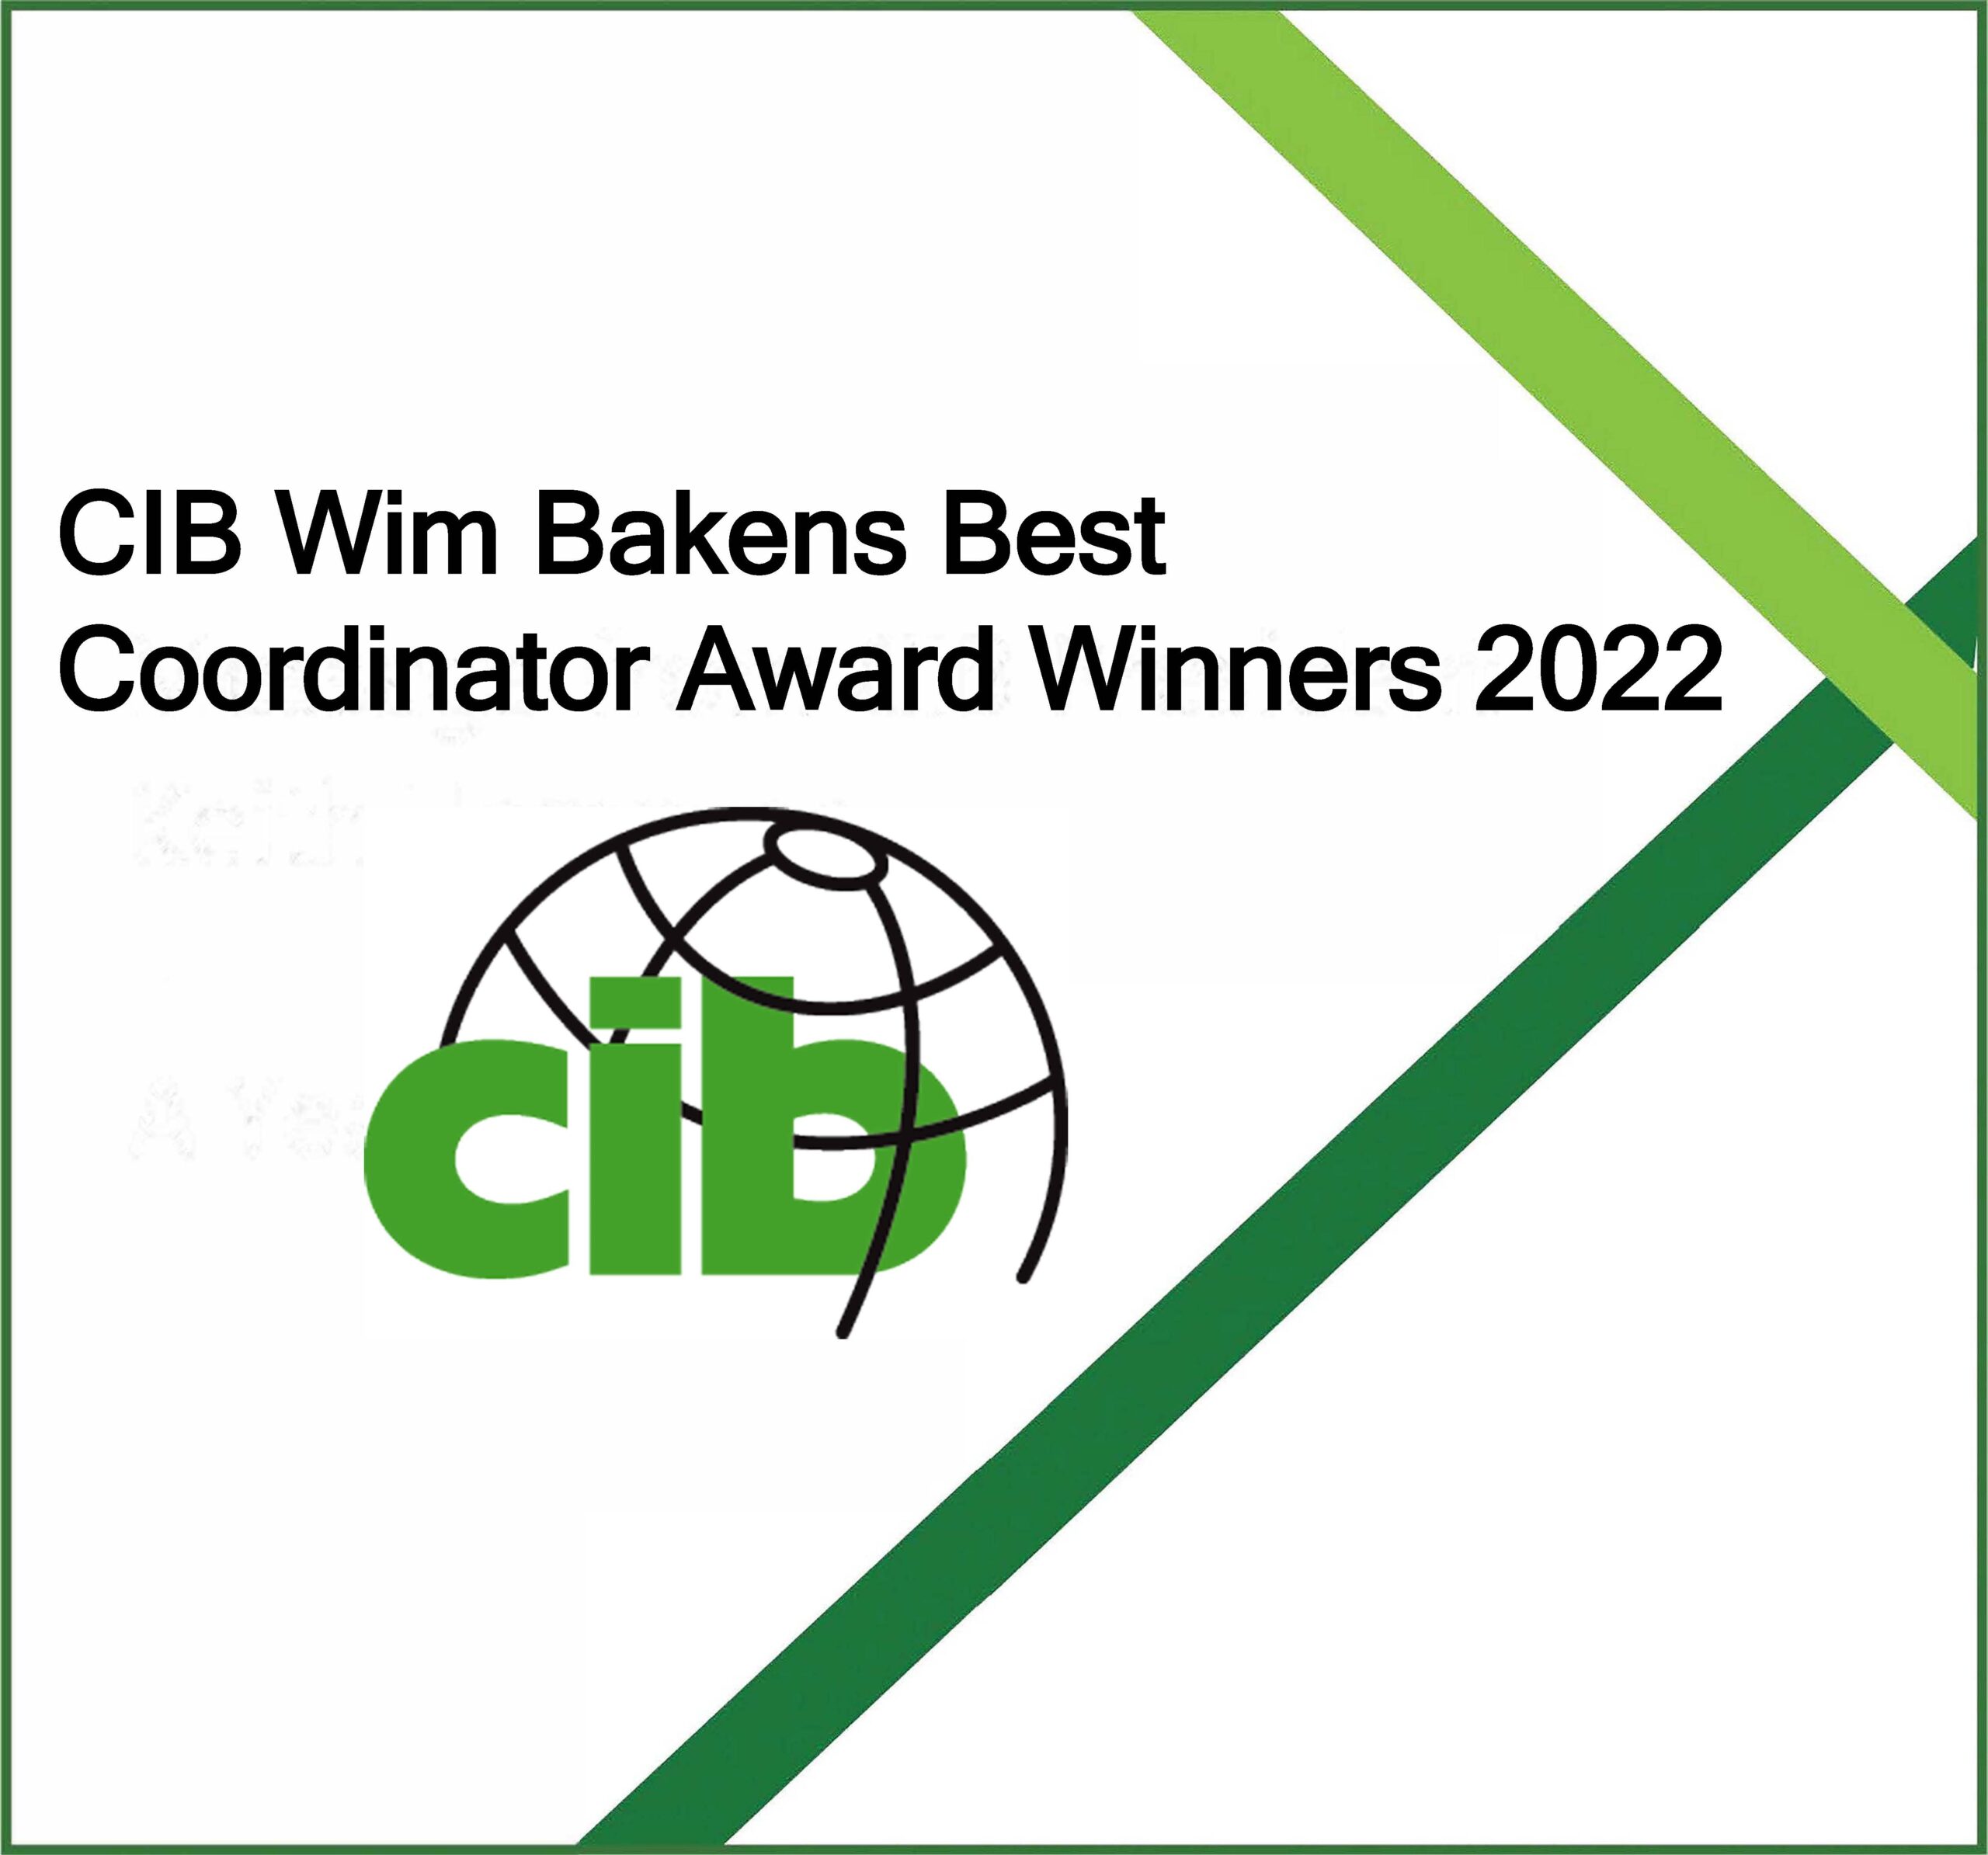 CIB Wim Bakens Best Coordinator Award Winners 2022